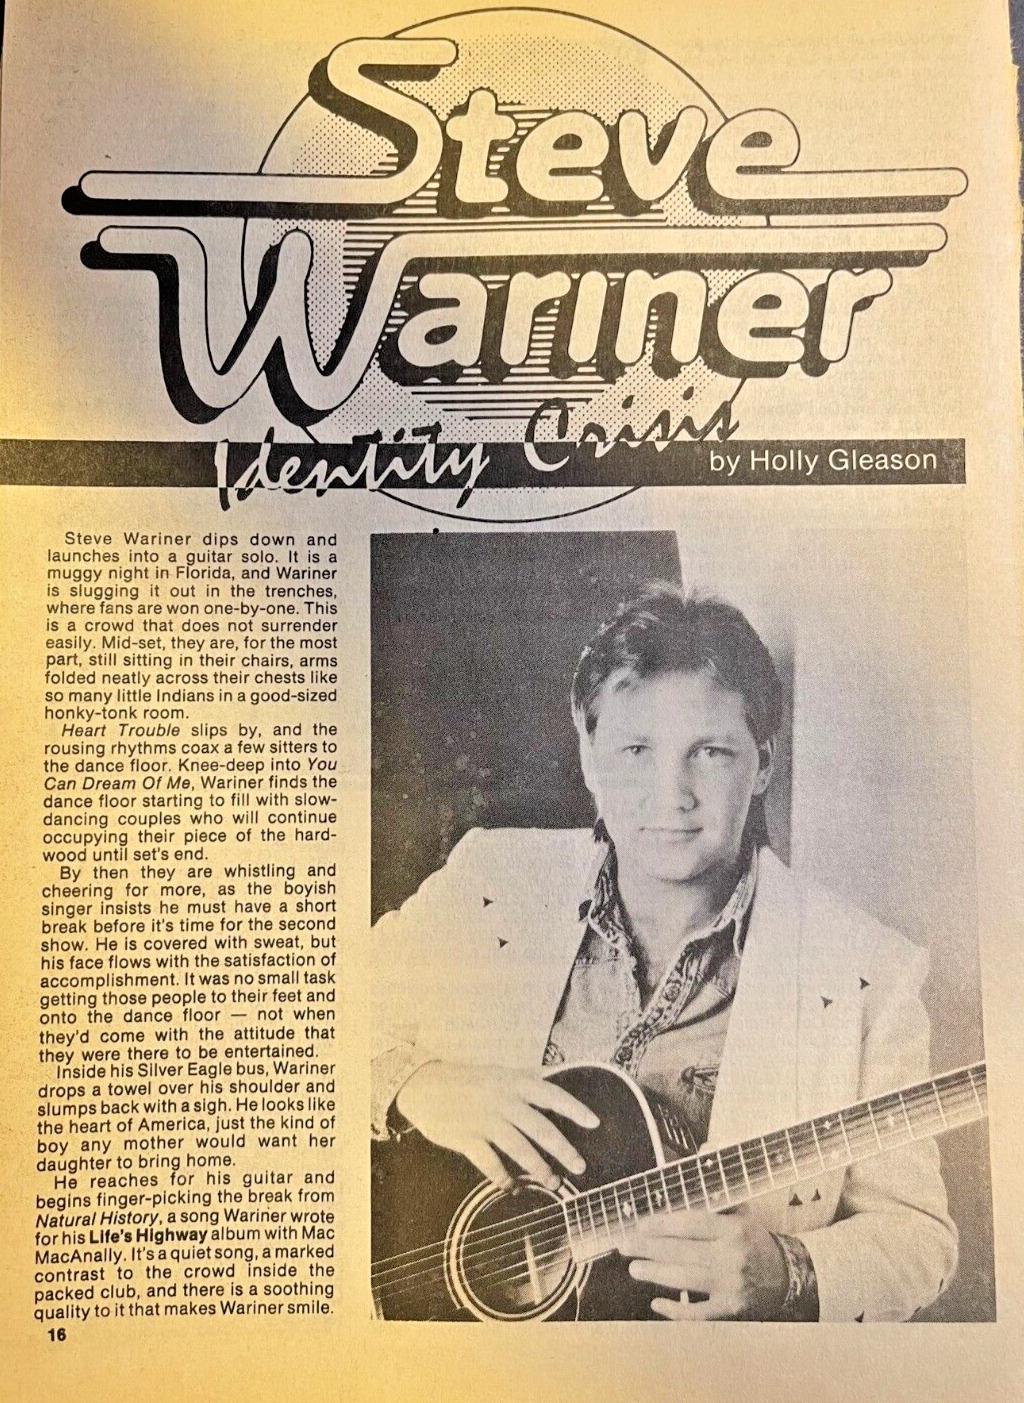 1987 Country Music Performer Steve Wariner